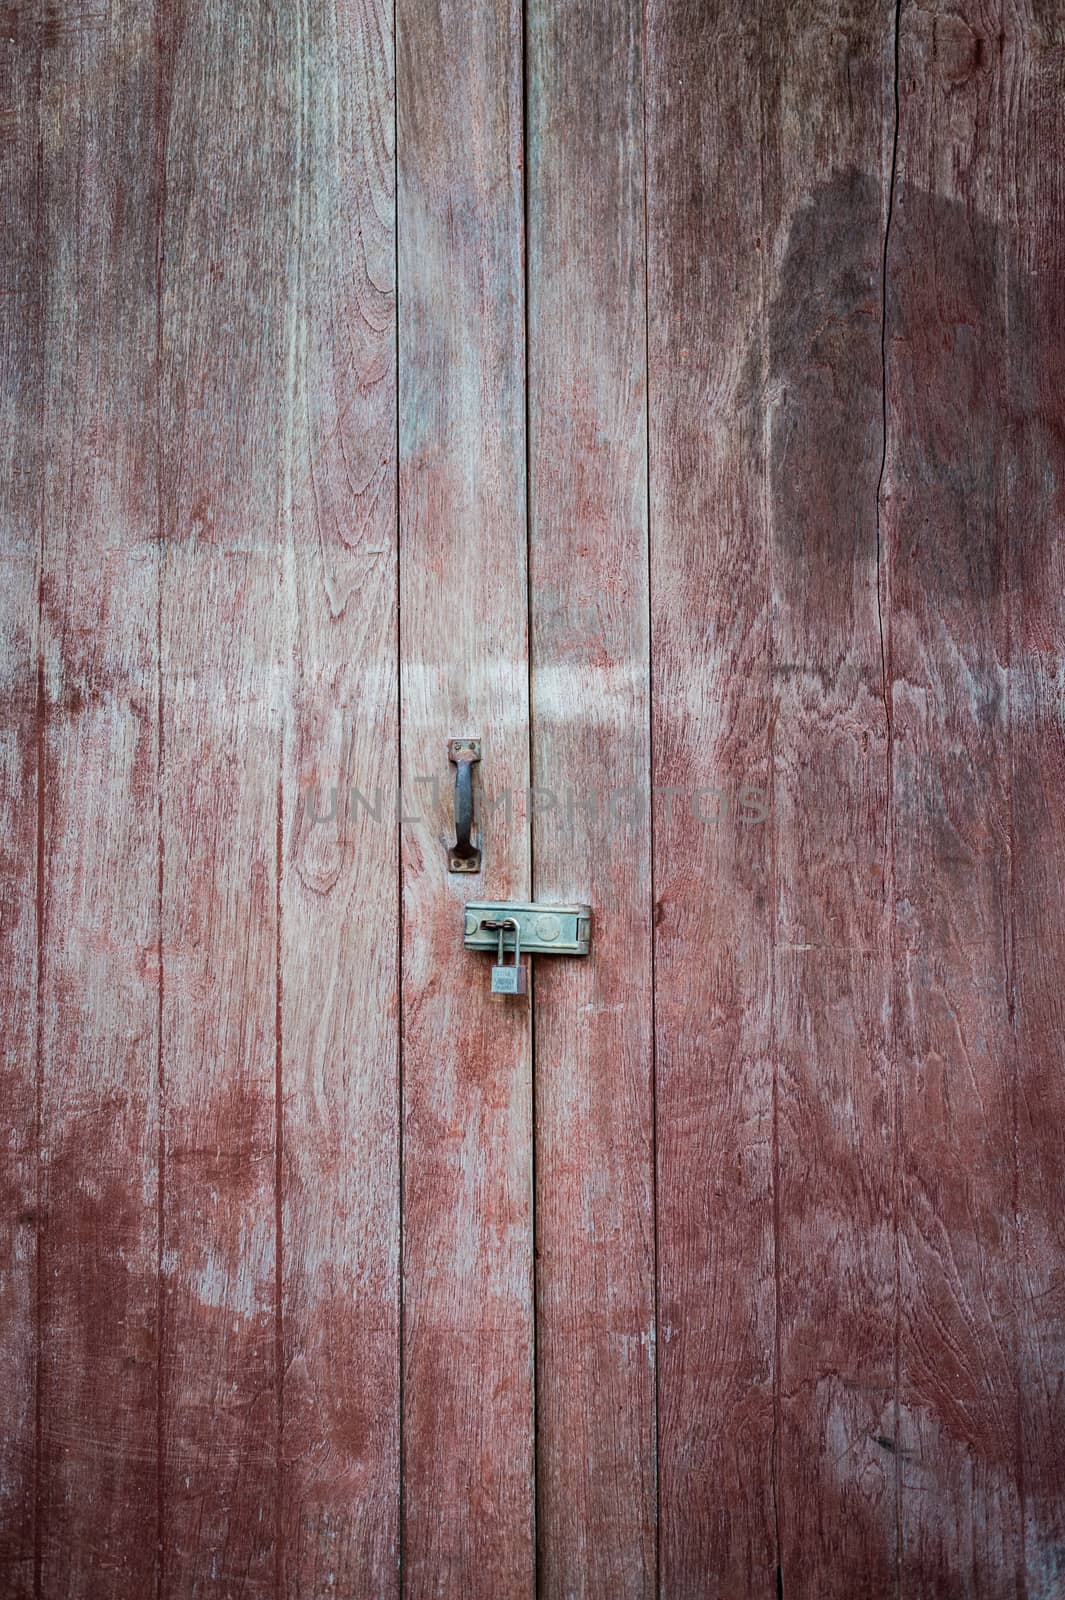 Closeup of old key lock with wood door